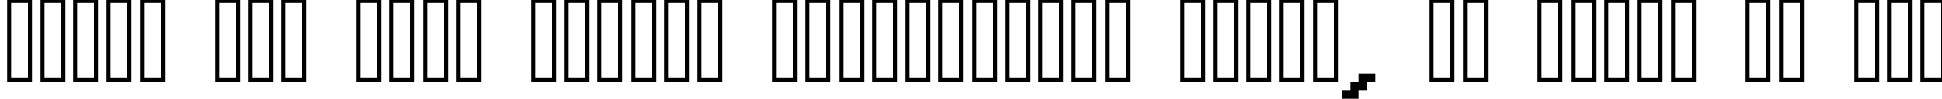 Пример написания шрифтом italic 08_65 текста на русском